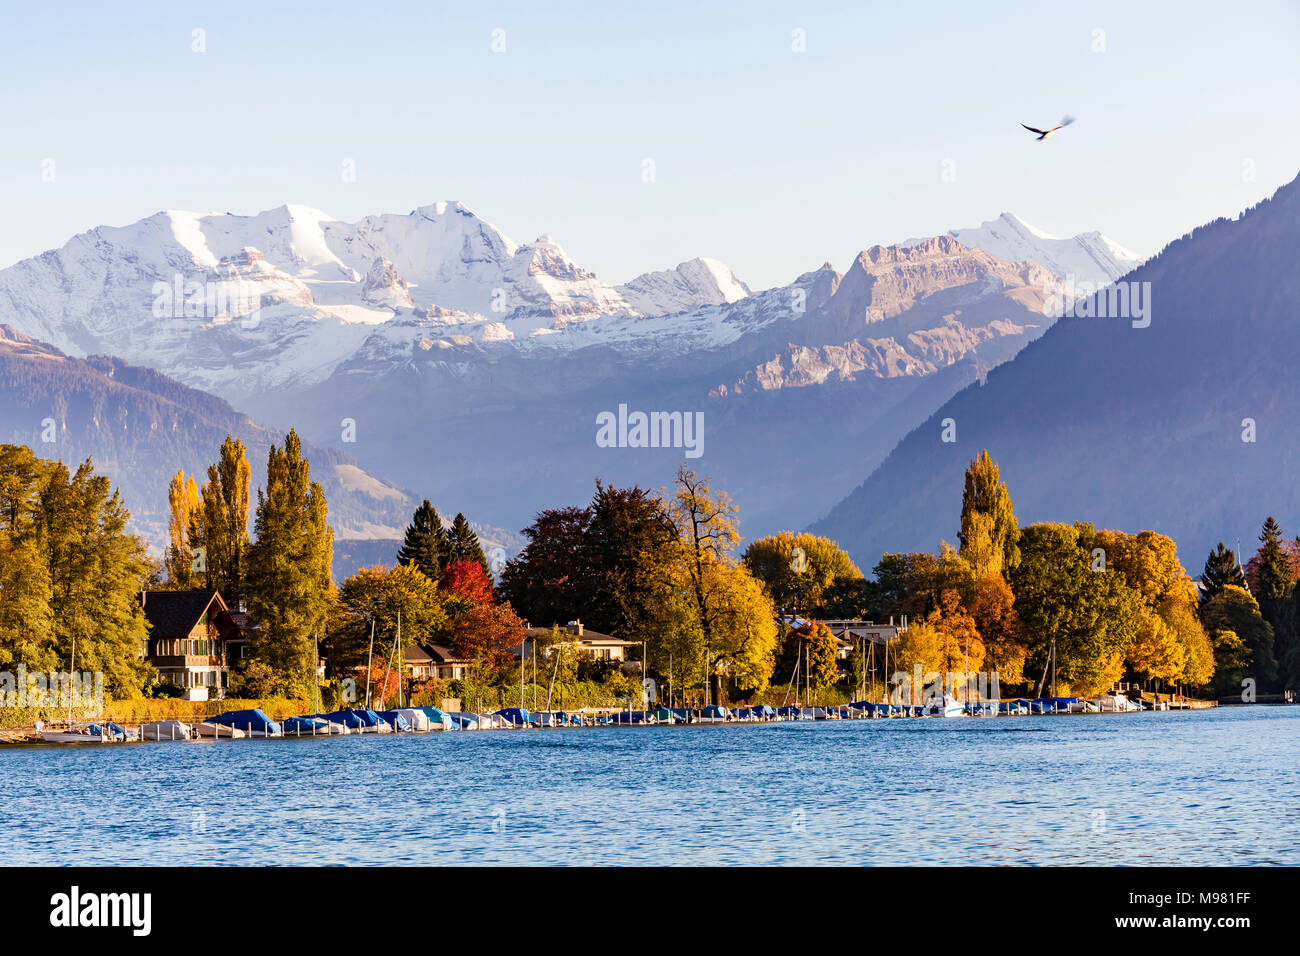 Schweiz, Kanton Bern, Berner Oberland, Thun, Schweizer Alpen, Alpenpanorama, Fluss Aare, Aarebecken, Bächimattpromenade, Boote, Herbst Stock Photo